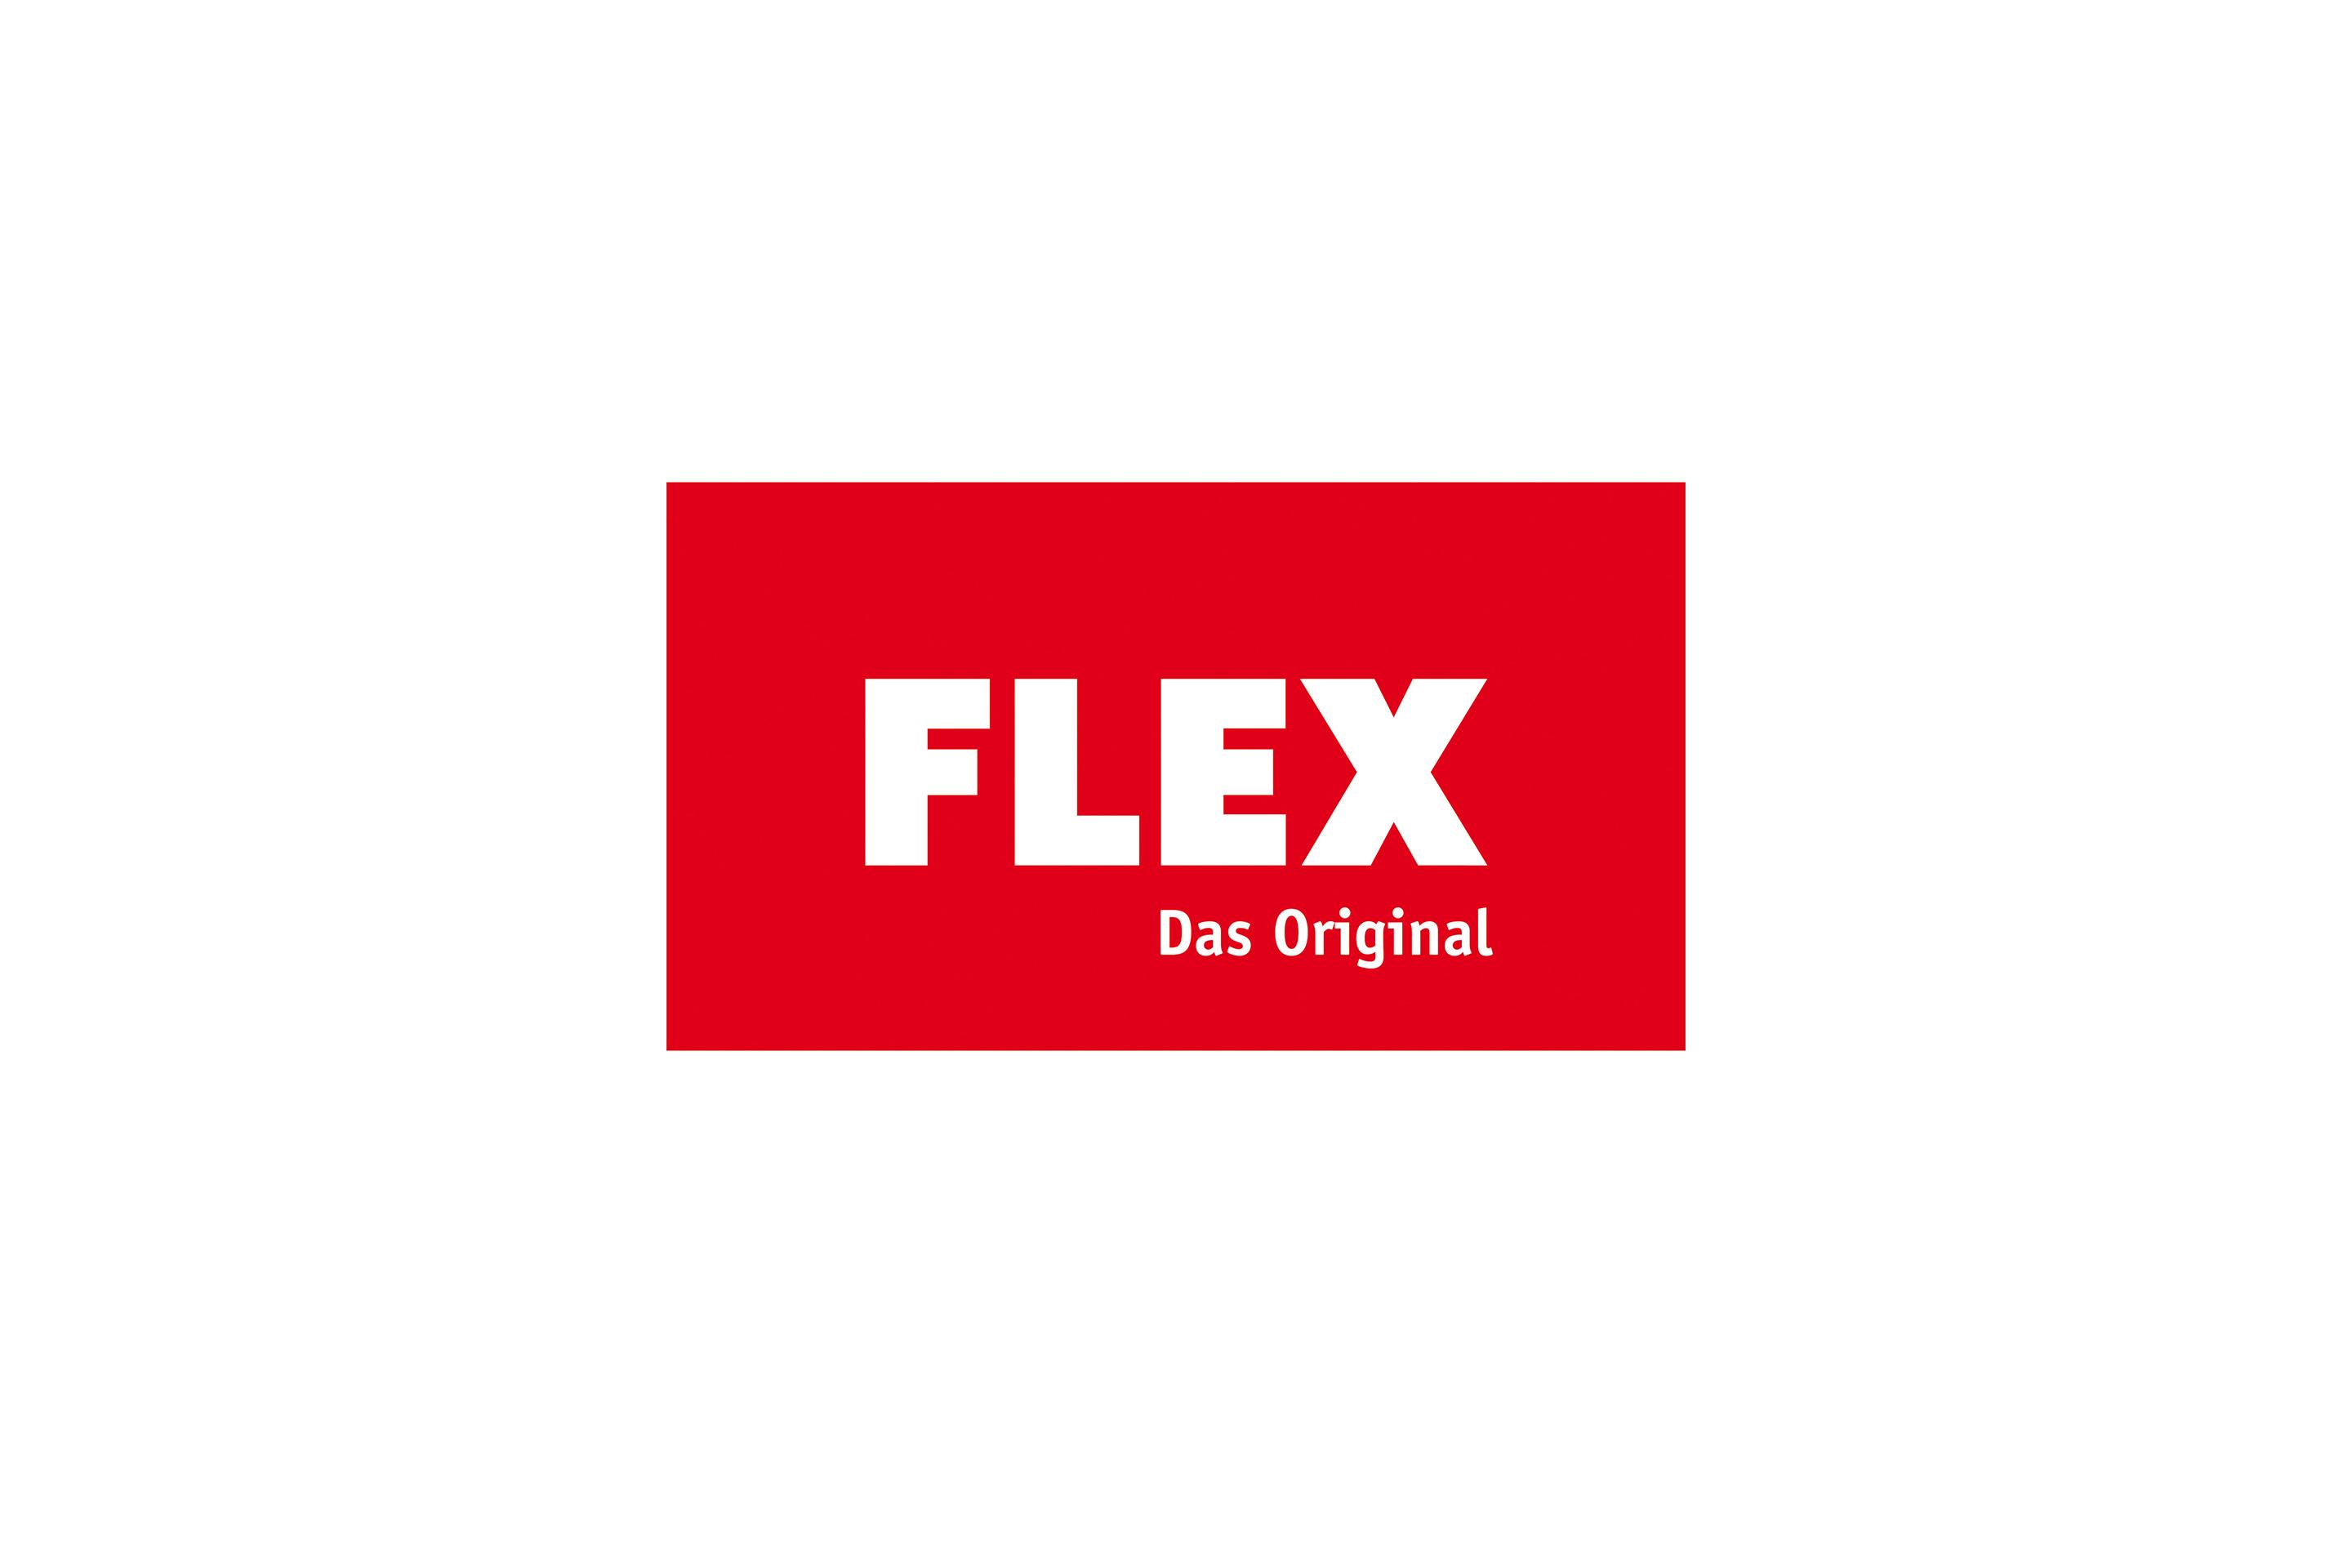 FLEX L’originale Logo La storia